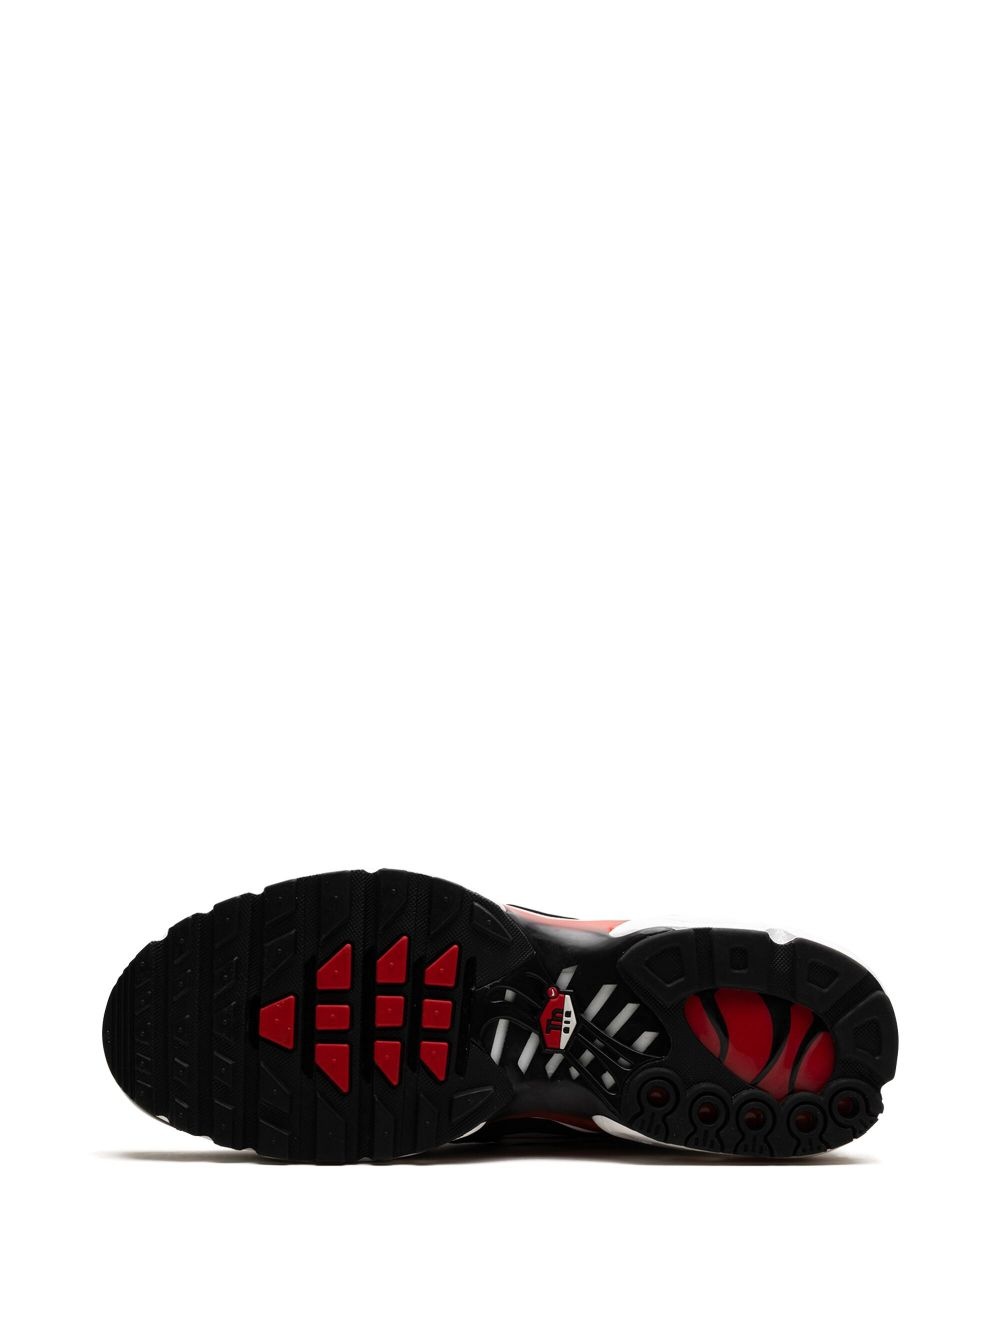 Air Max Plus "Black/White/University Red" sneakers - 4